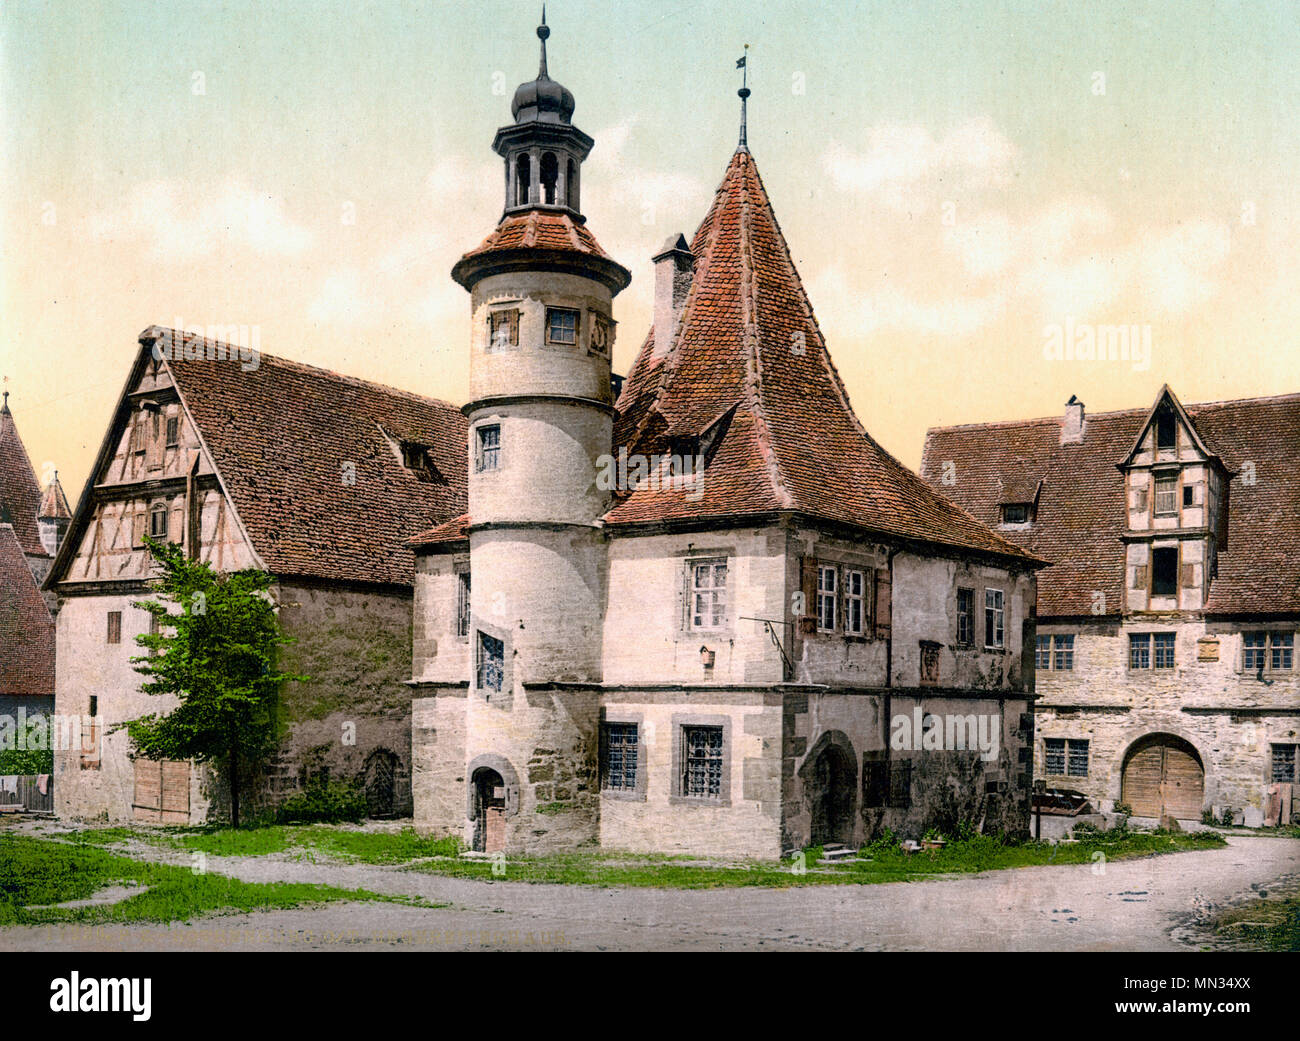 Guardiacaccia house (cioè Hegereiterhaus), Rothenburg, Baviera, Germania, circa 1900 Foto Stock